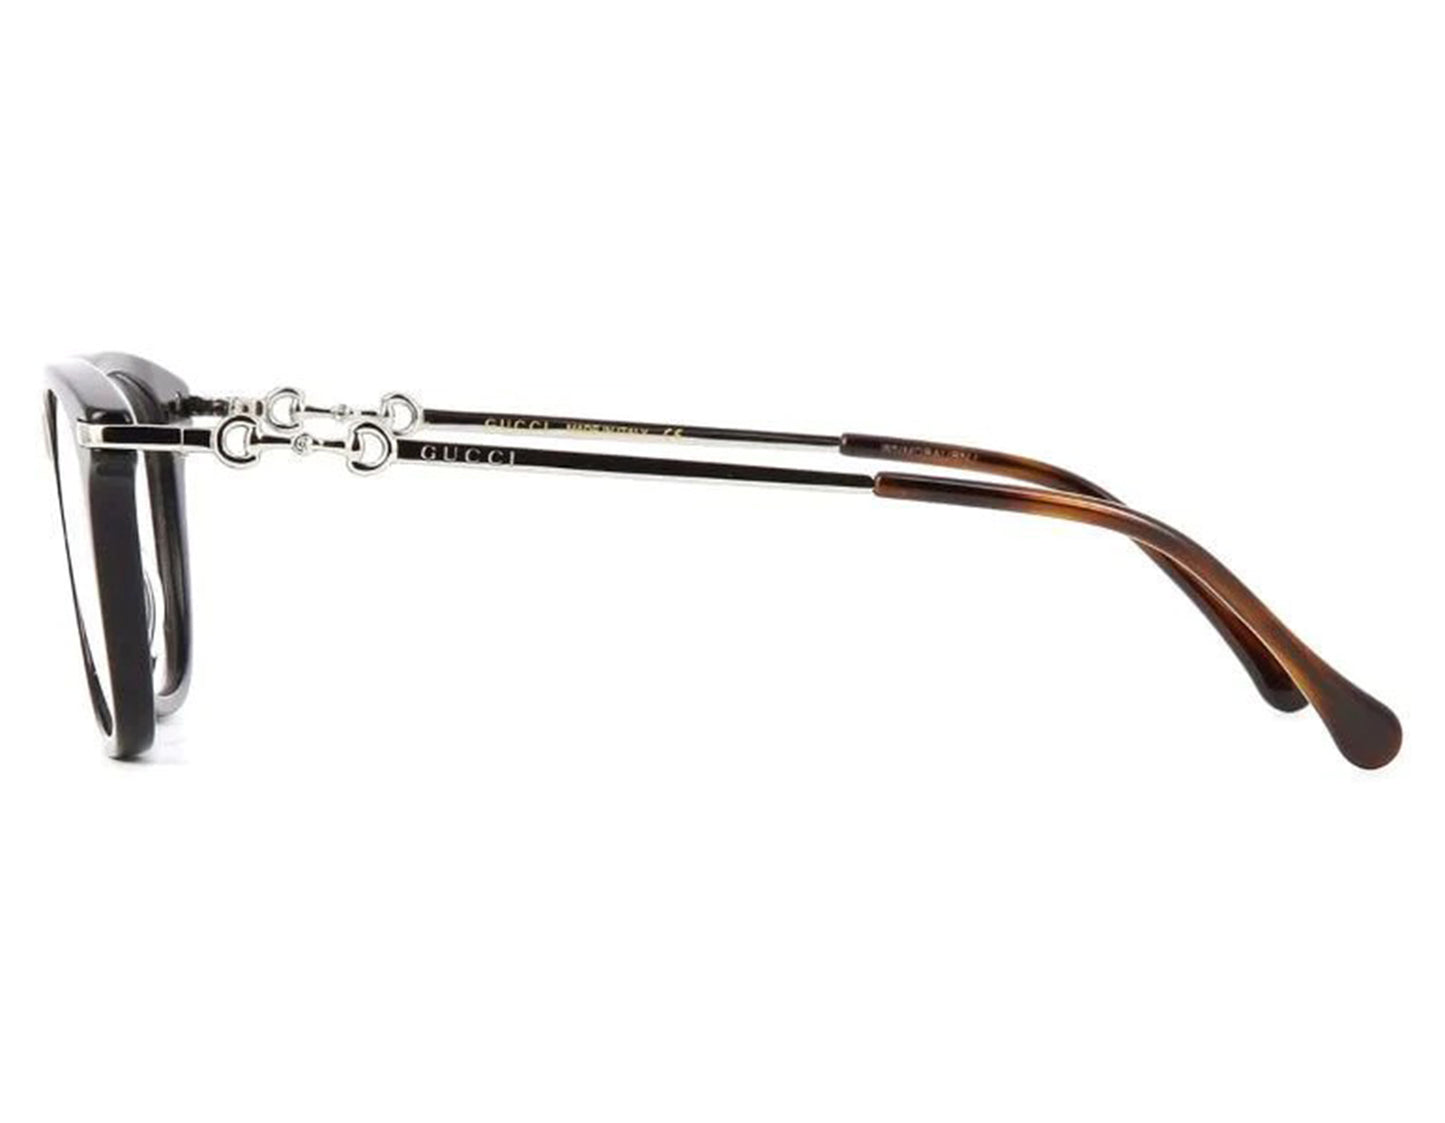 Gucci GG0919o-001 50mm New Eyeglasses